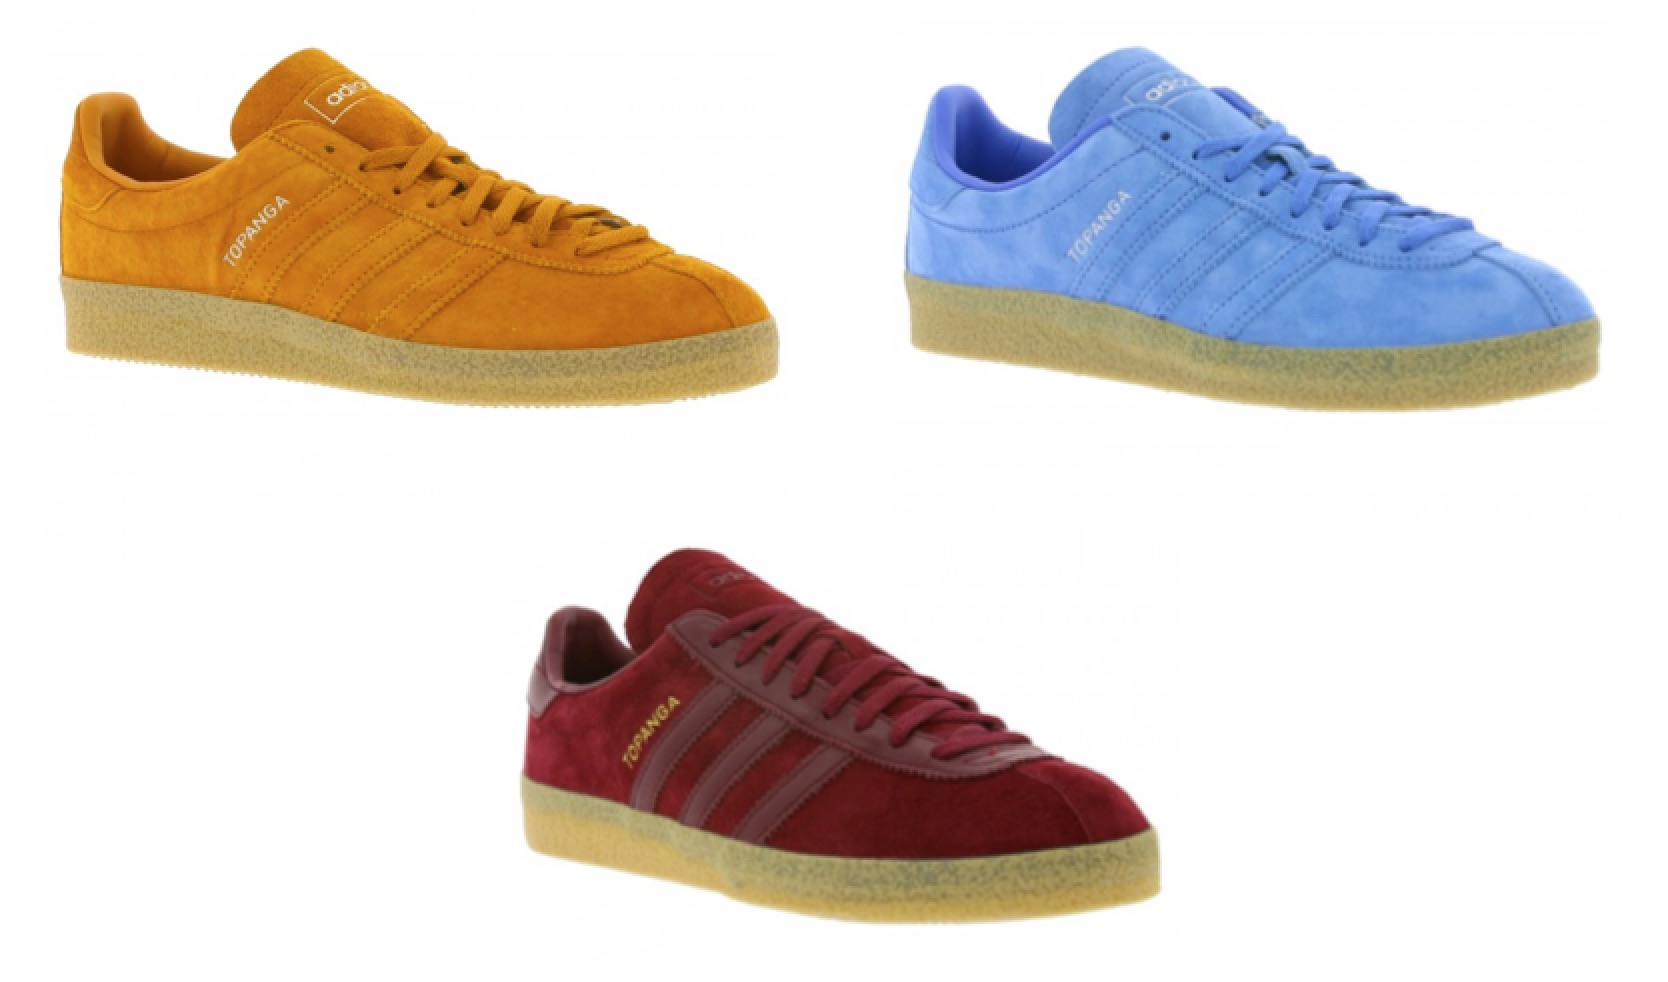 Adidas Originals Topanga Herren Sneaker für nur 49,99 Euro inkl. Versand